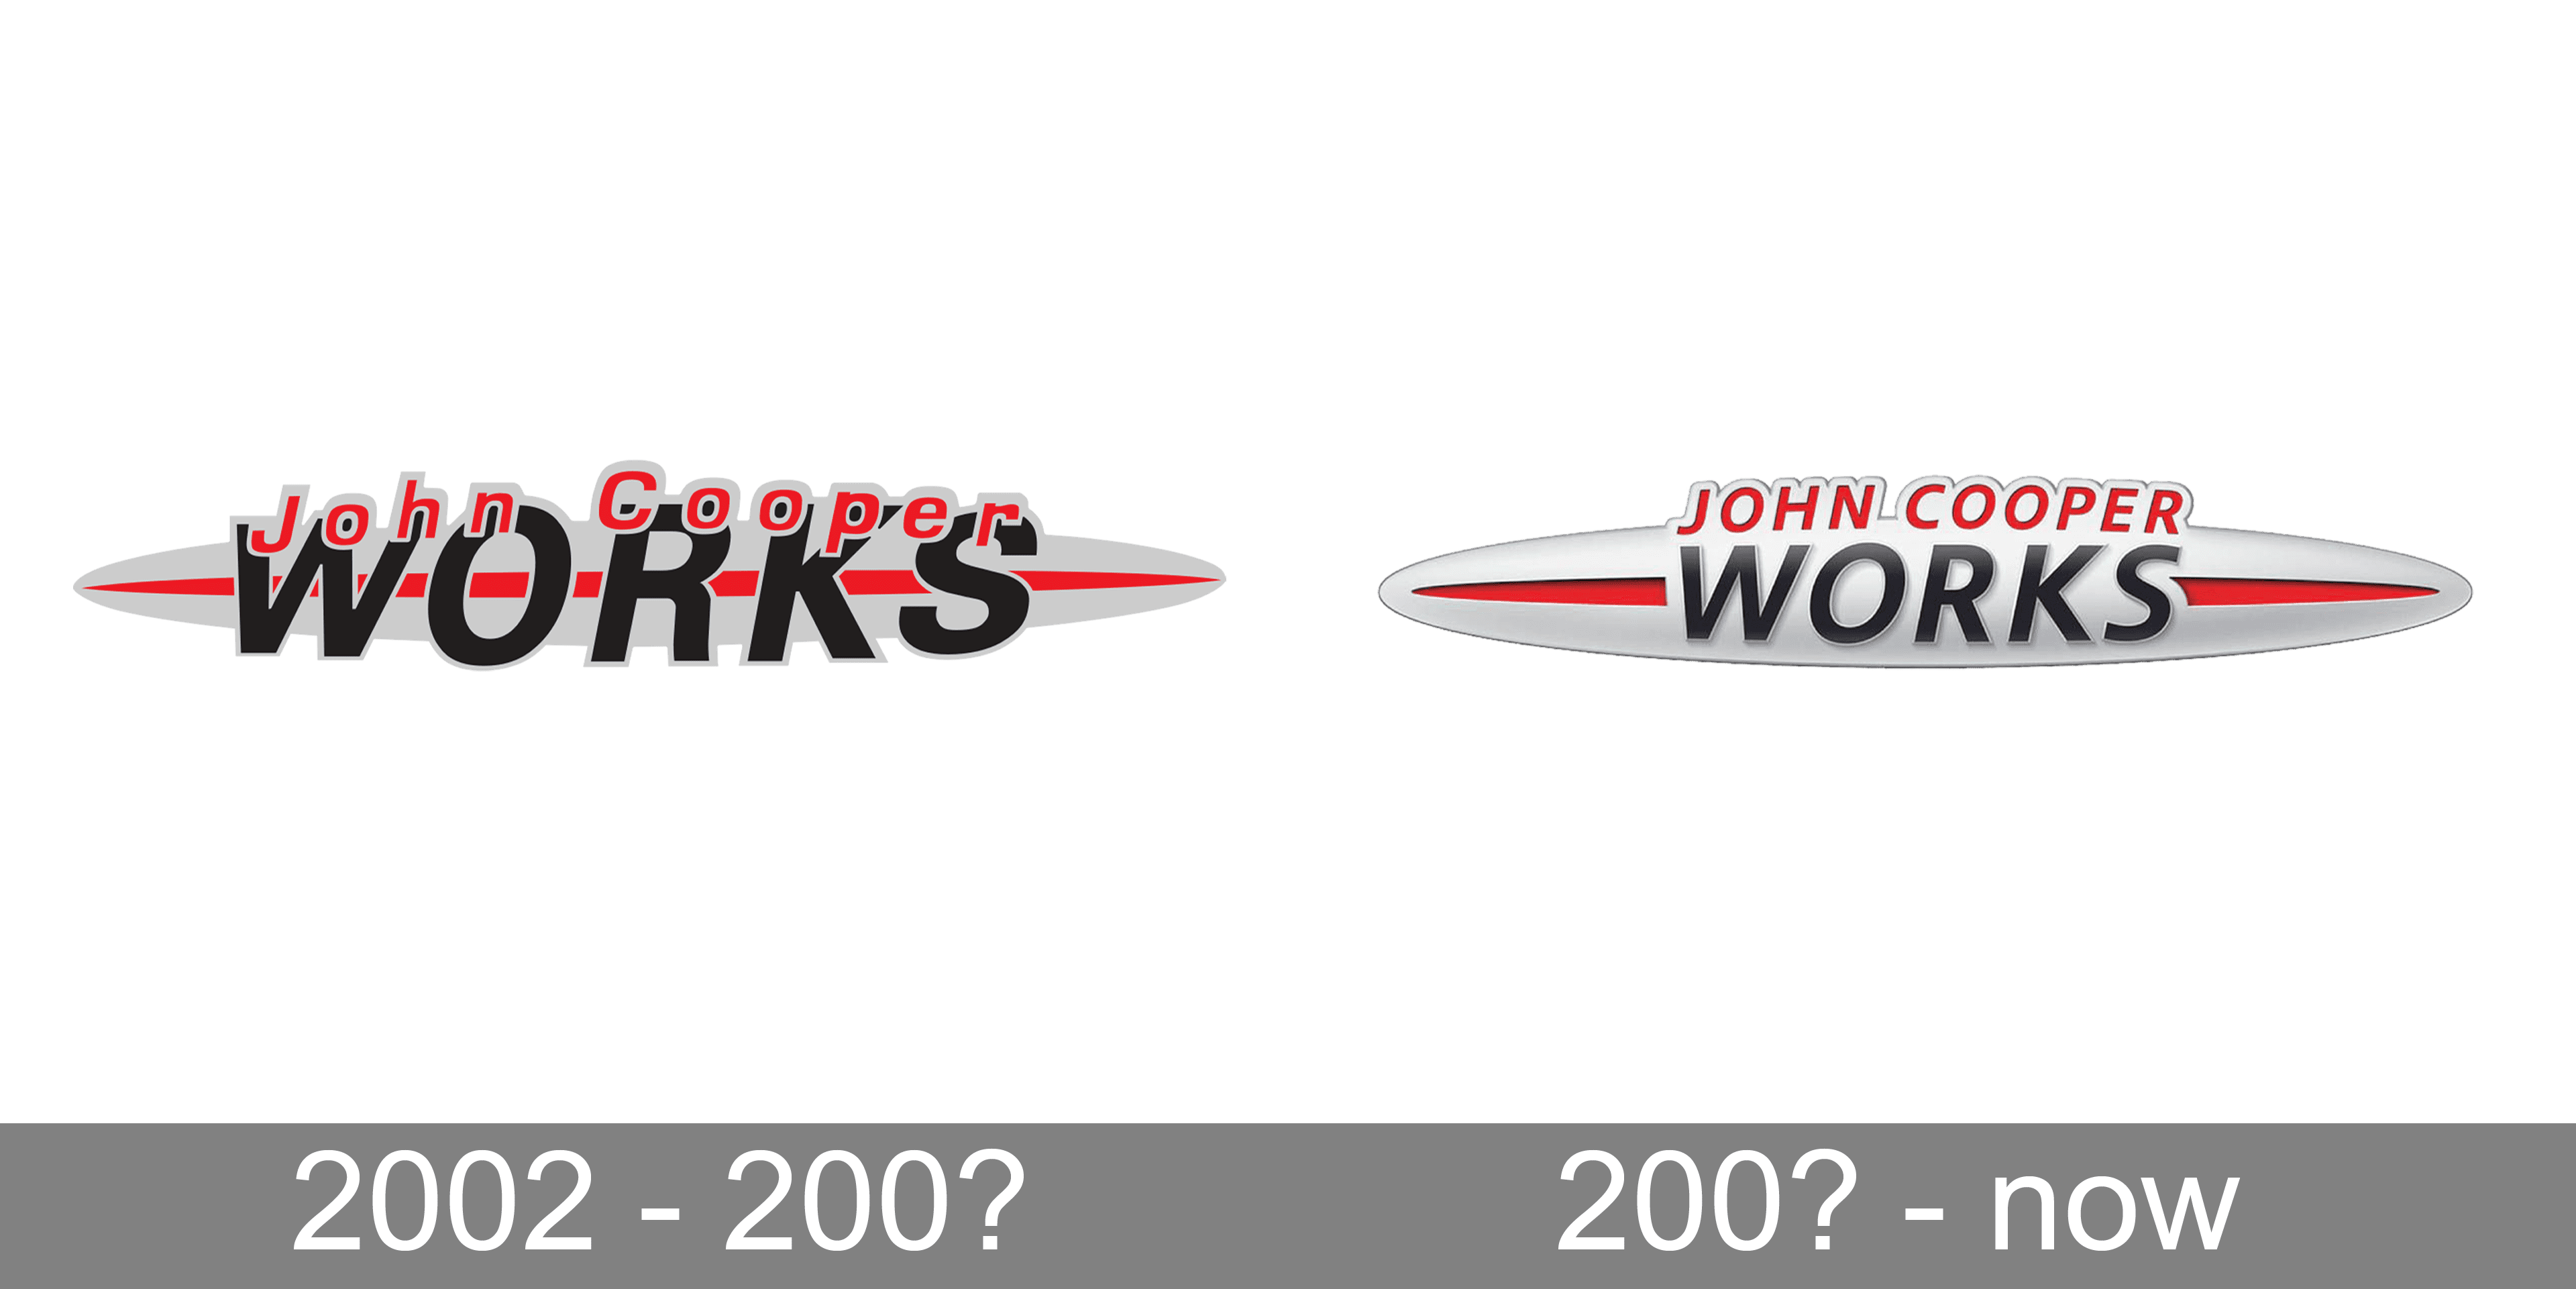 MINI Unveils New John Cooper Works Logo For Future JCW Cars